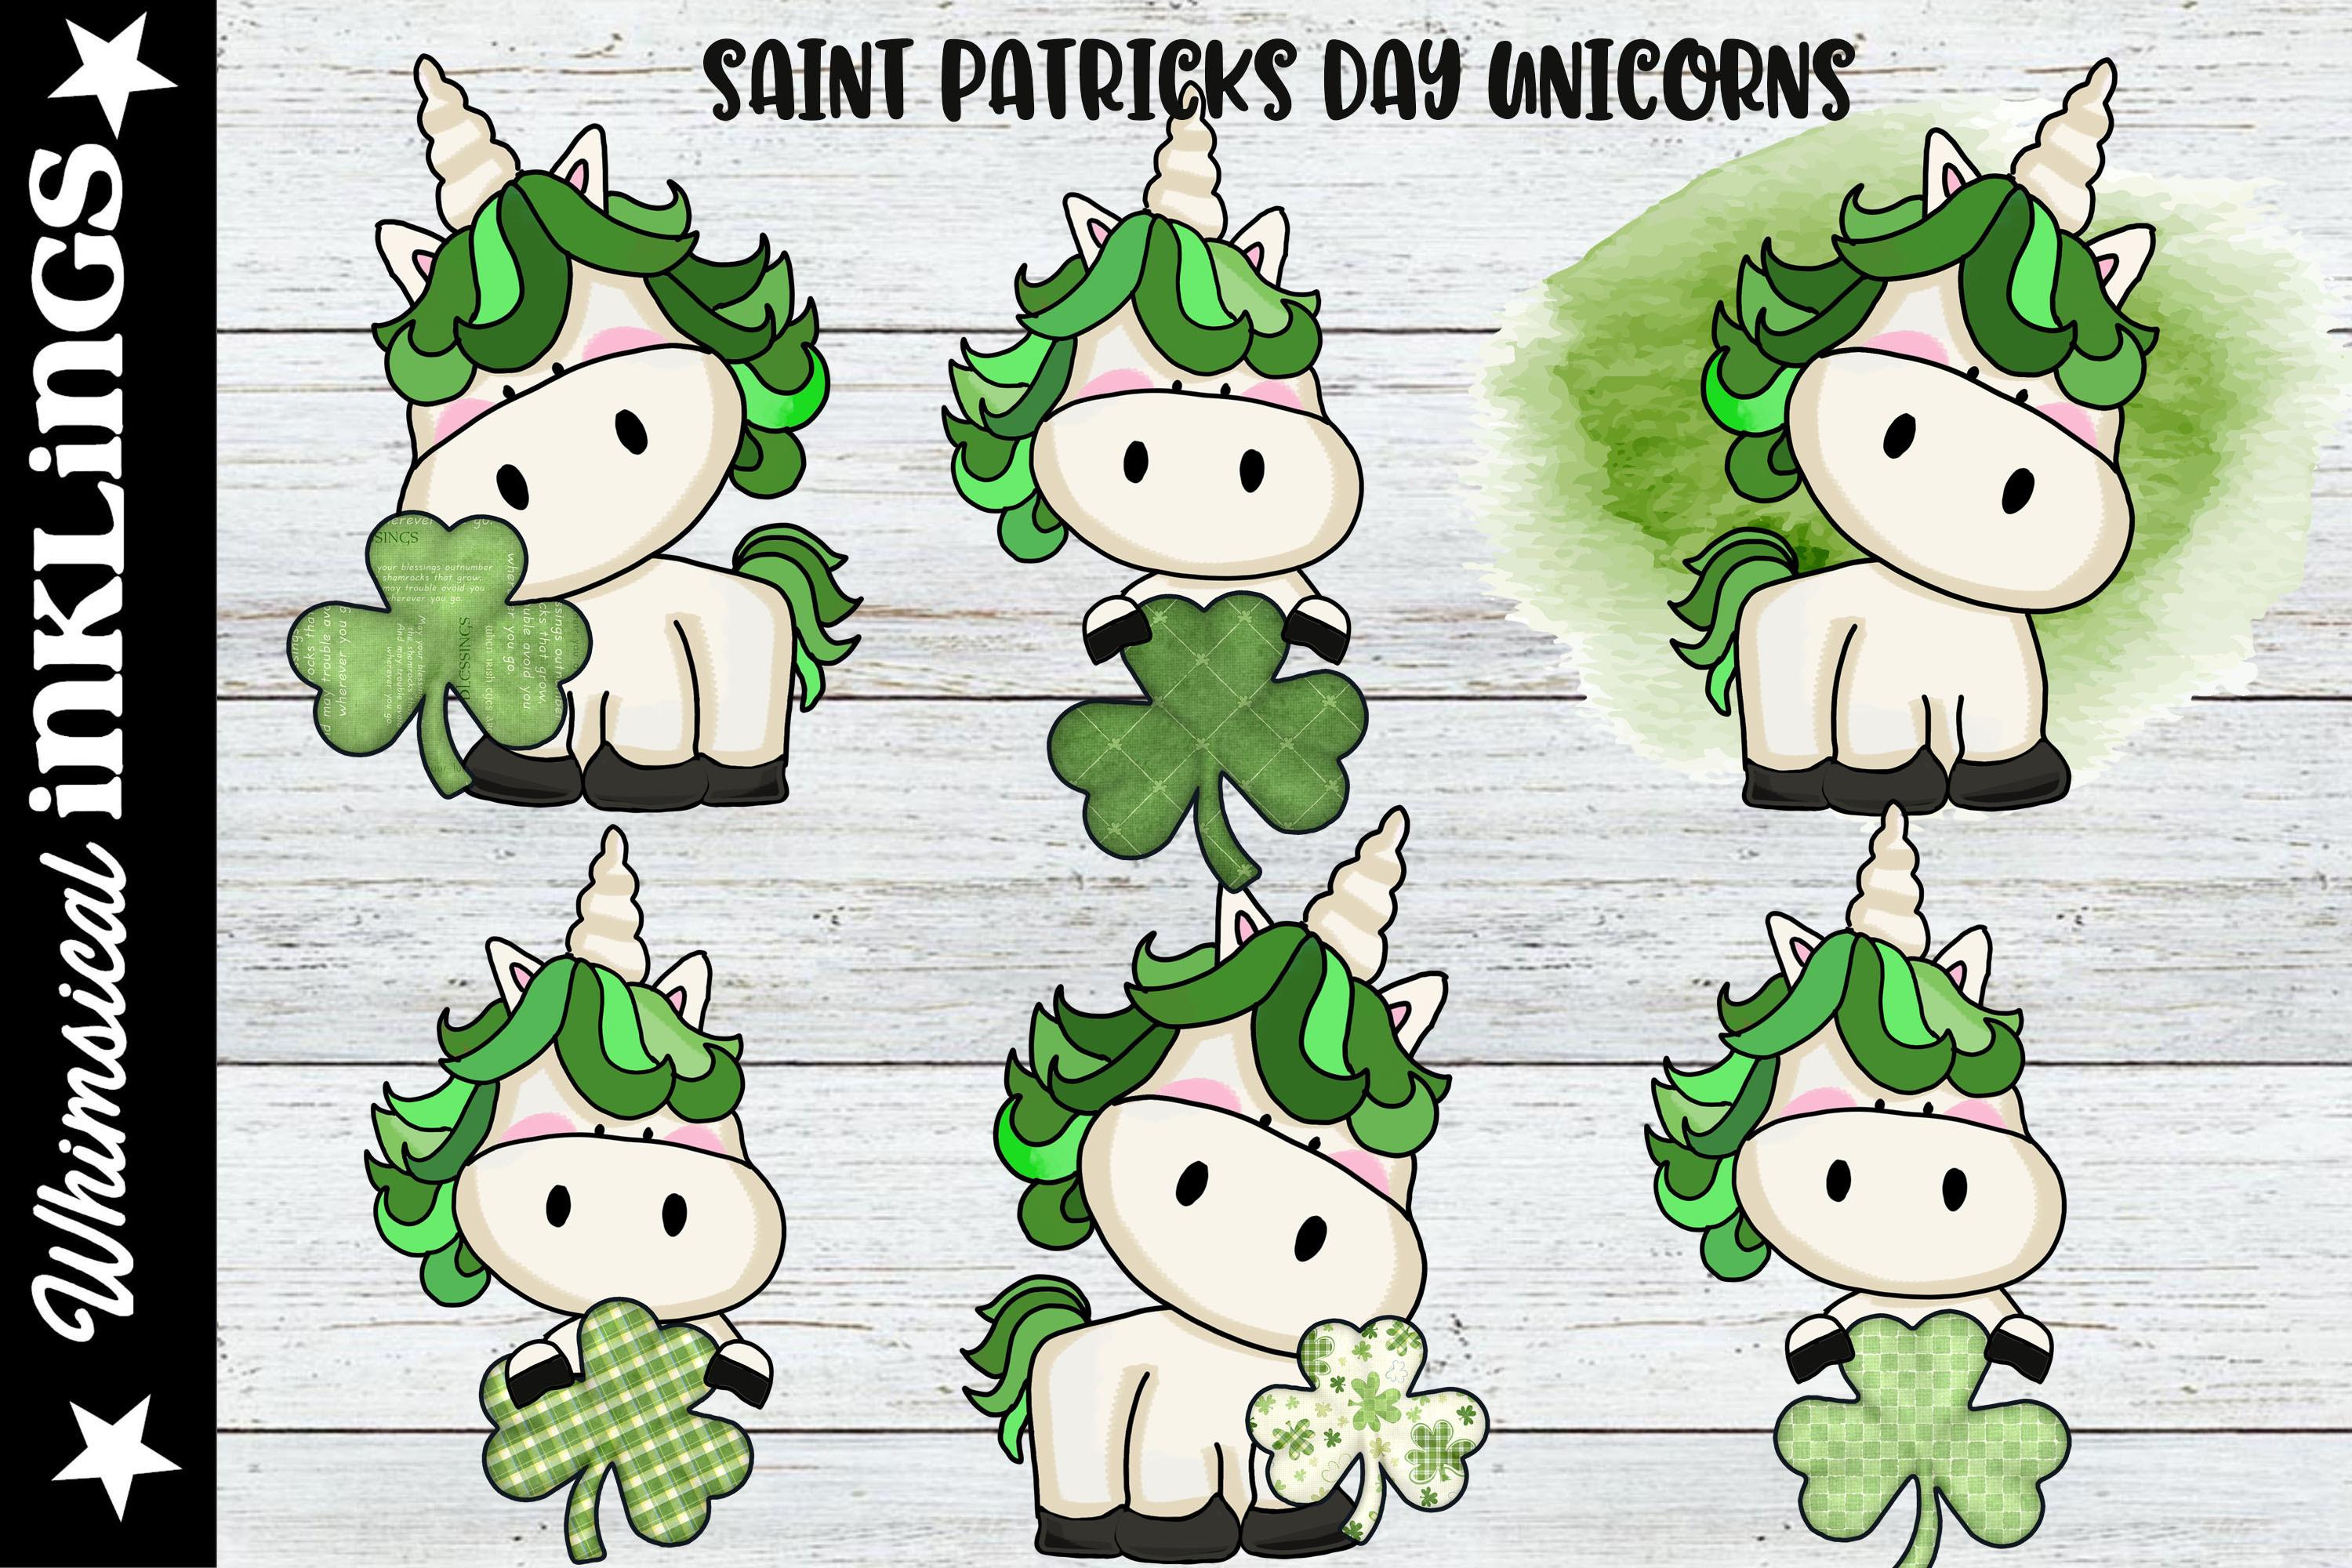 St. Patrick's Day Unicorns